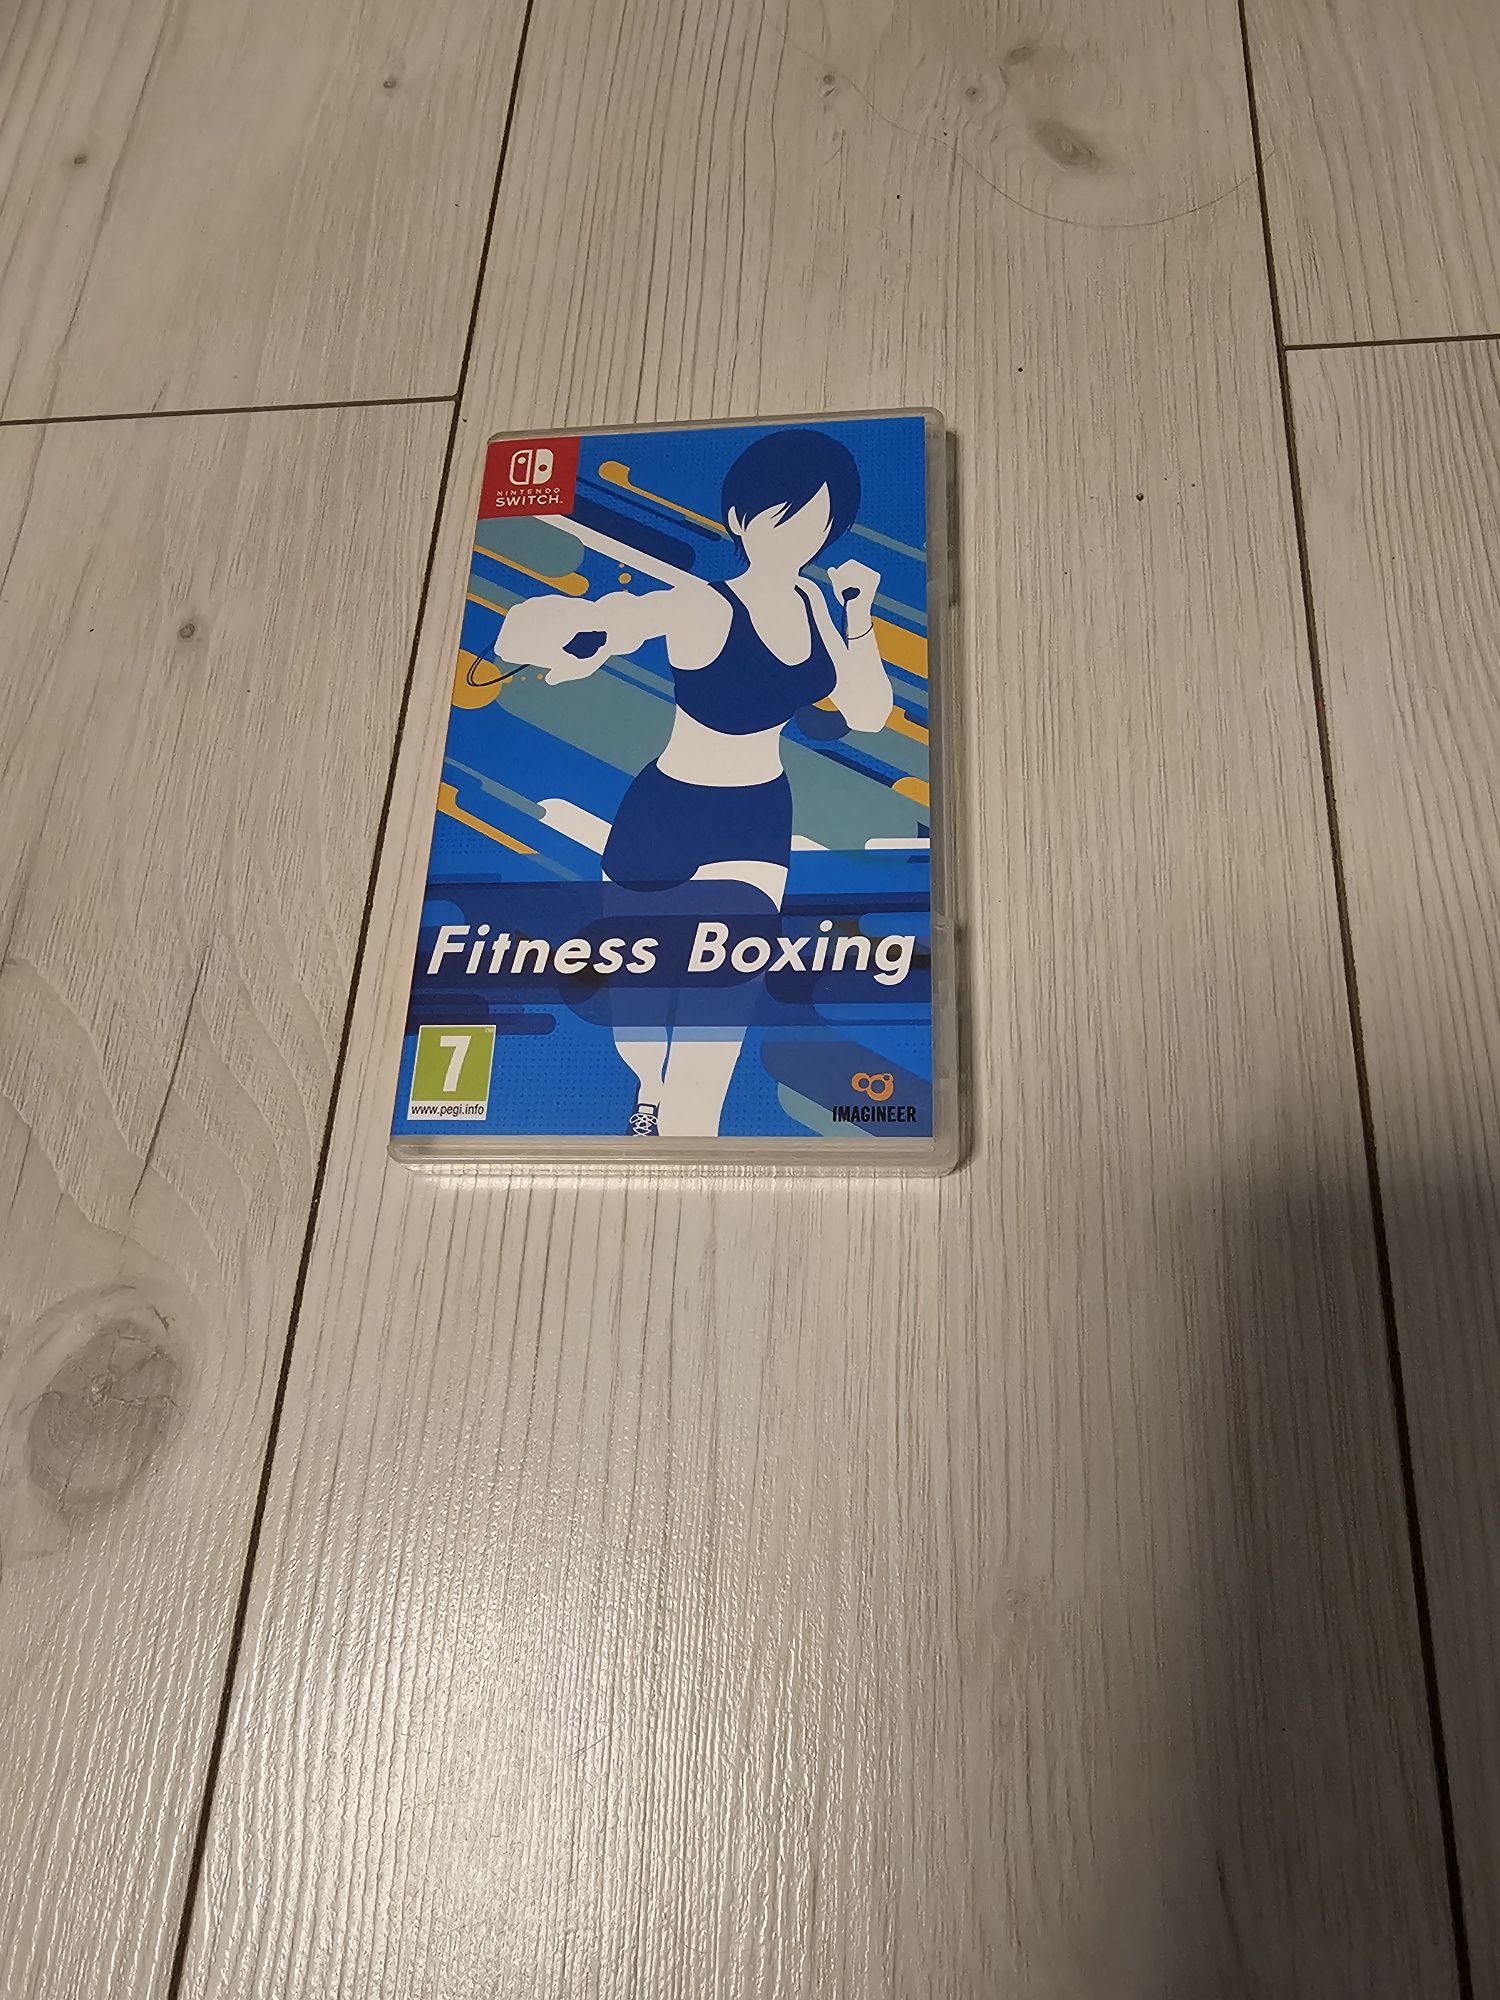 Nintendo switch fitness boxing